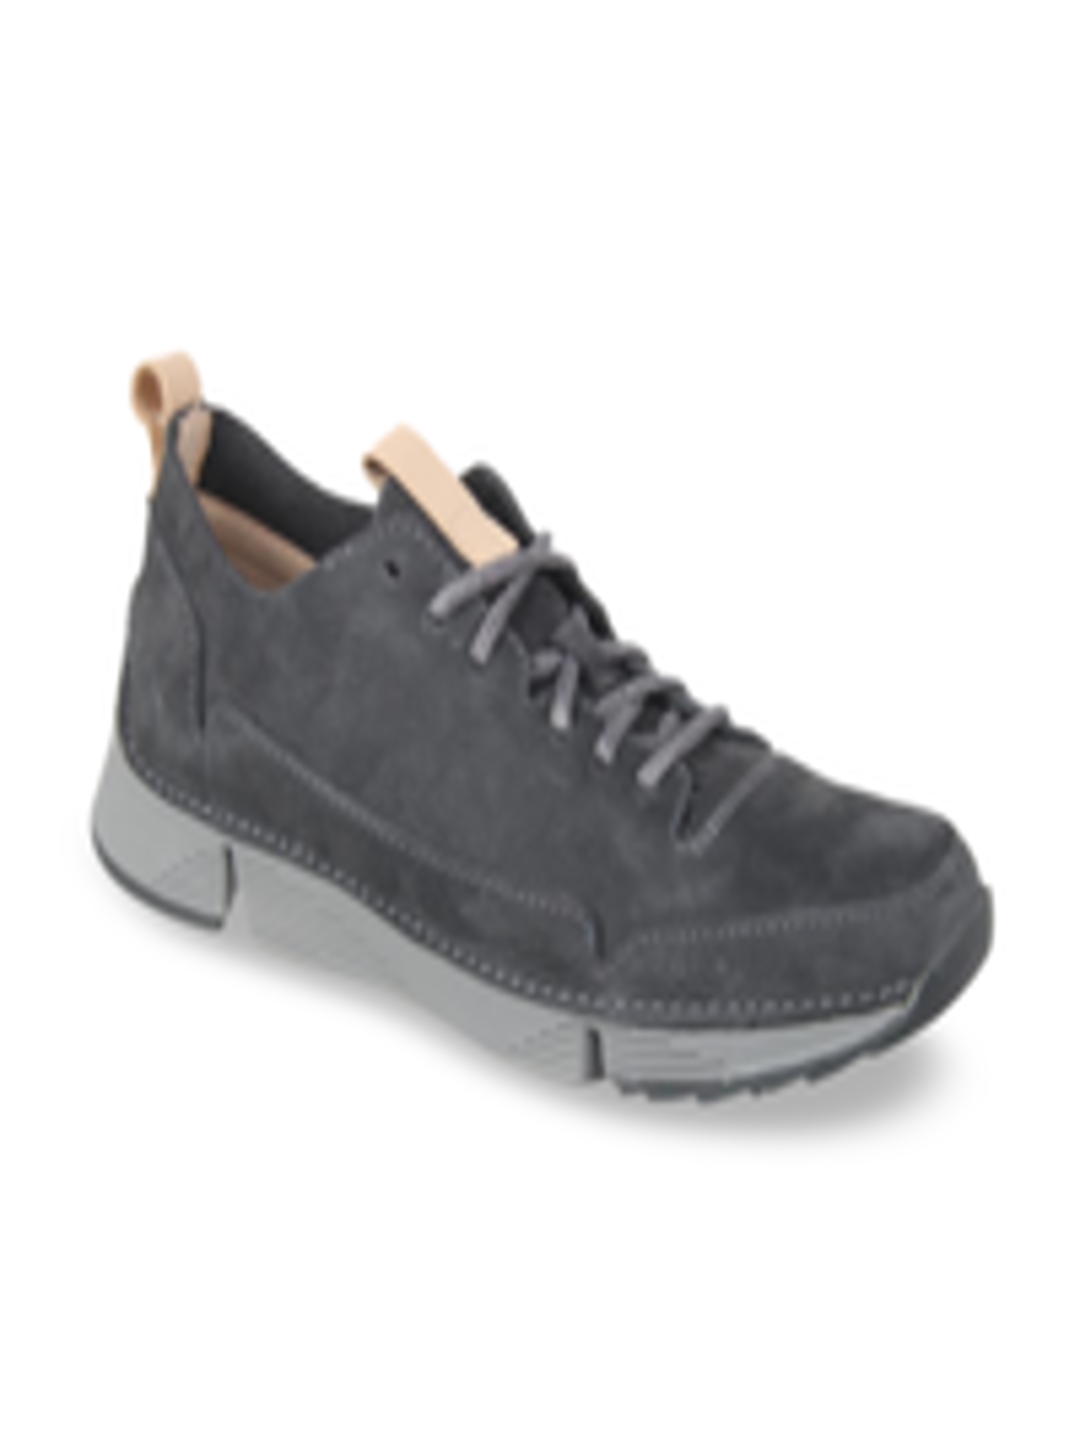 Buy Clarks Men Grey Sneakers - Casual Shoes for Men 9802455 | Myntra